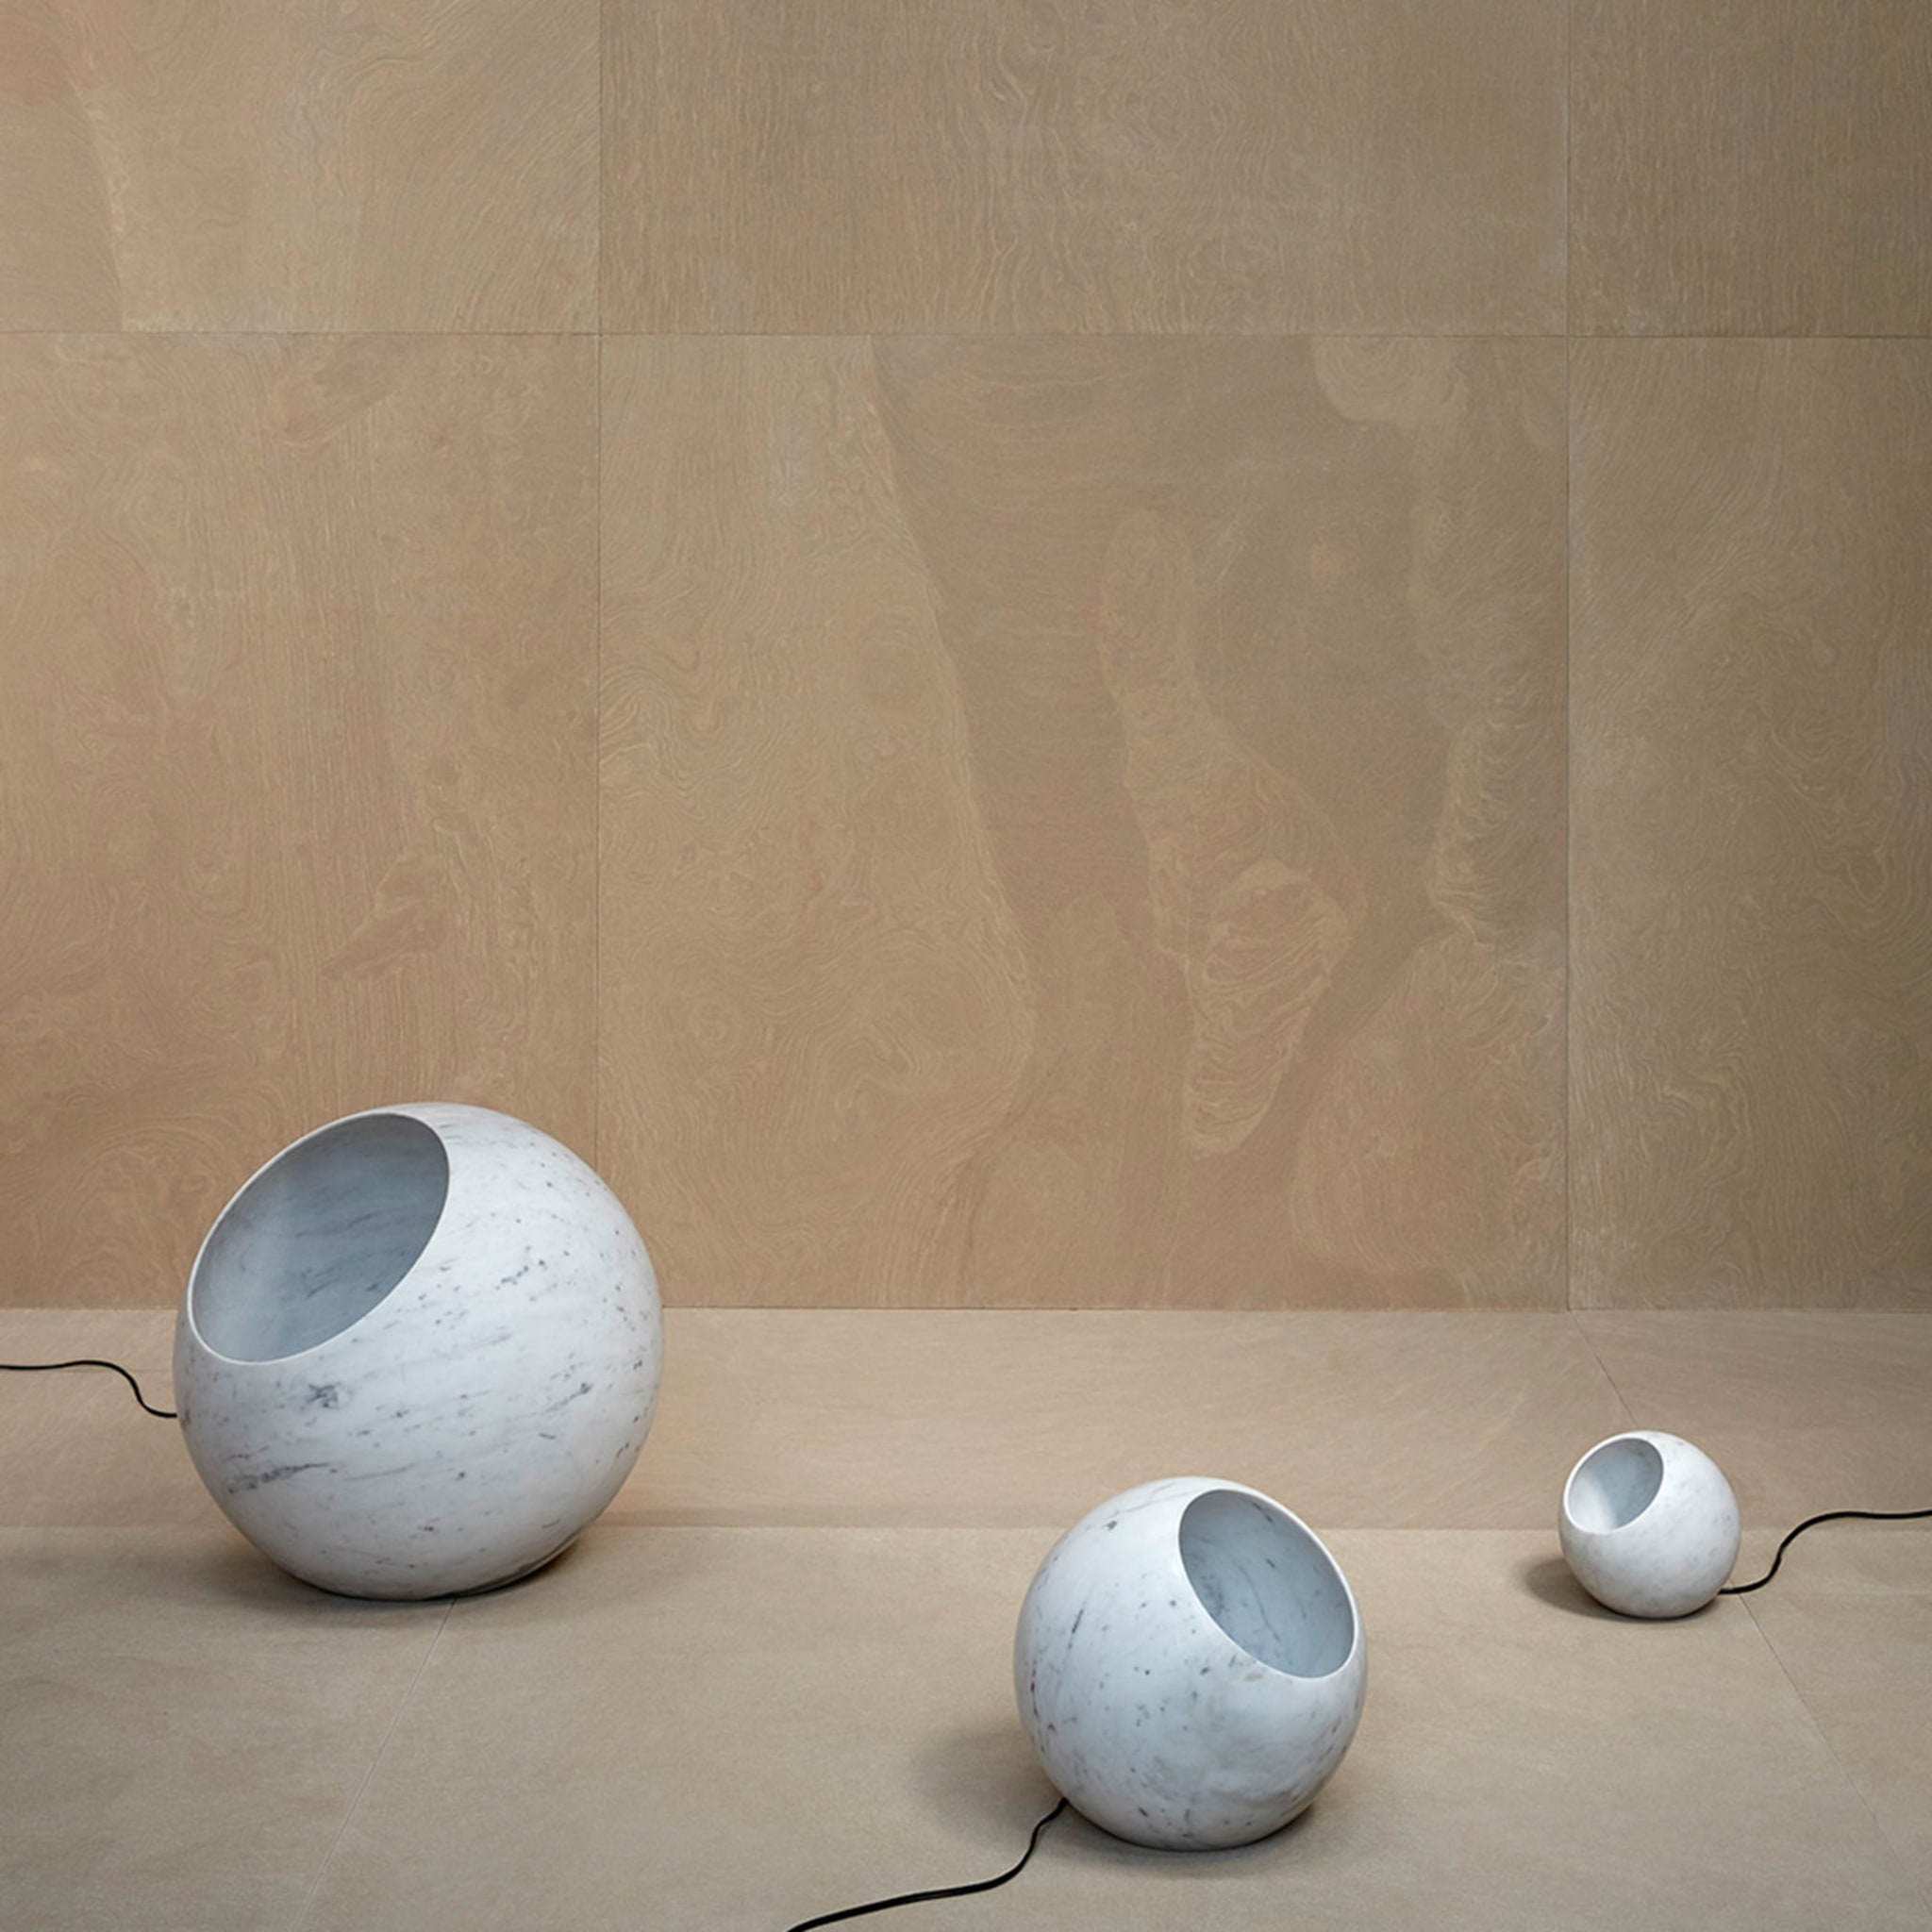 Urano Table Lamp By Elisa Ossino #2 - Alternative view 5